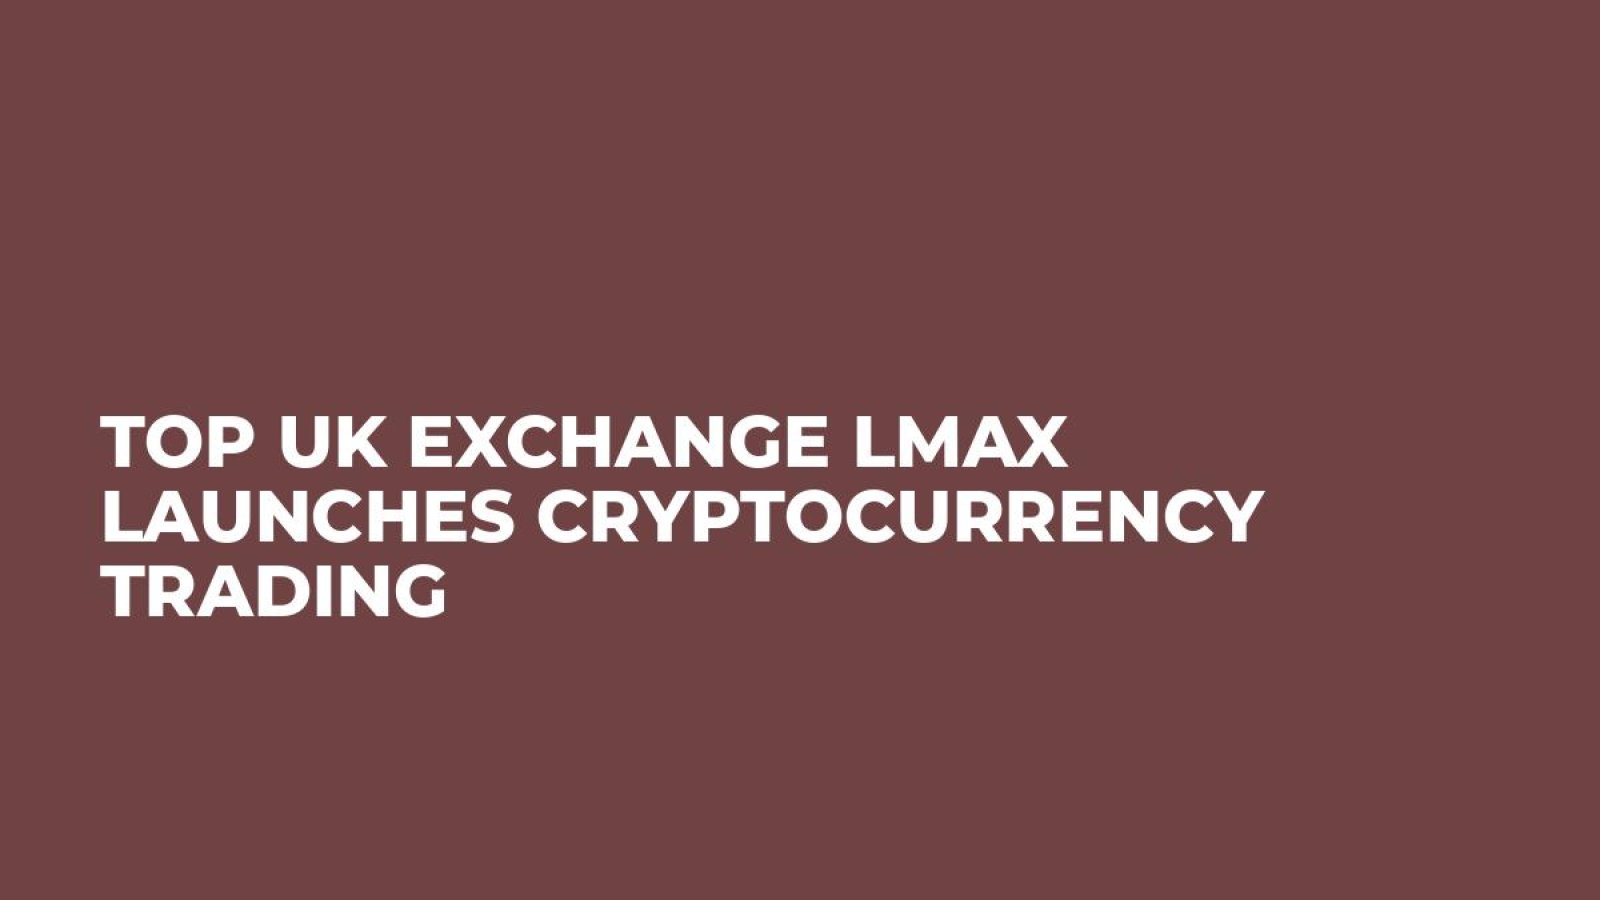 Top UK Exchange LMAX Launches Cryptocurrency Trading